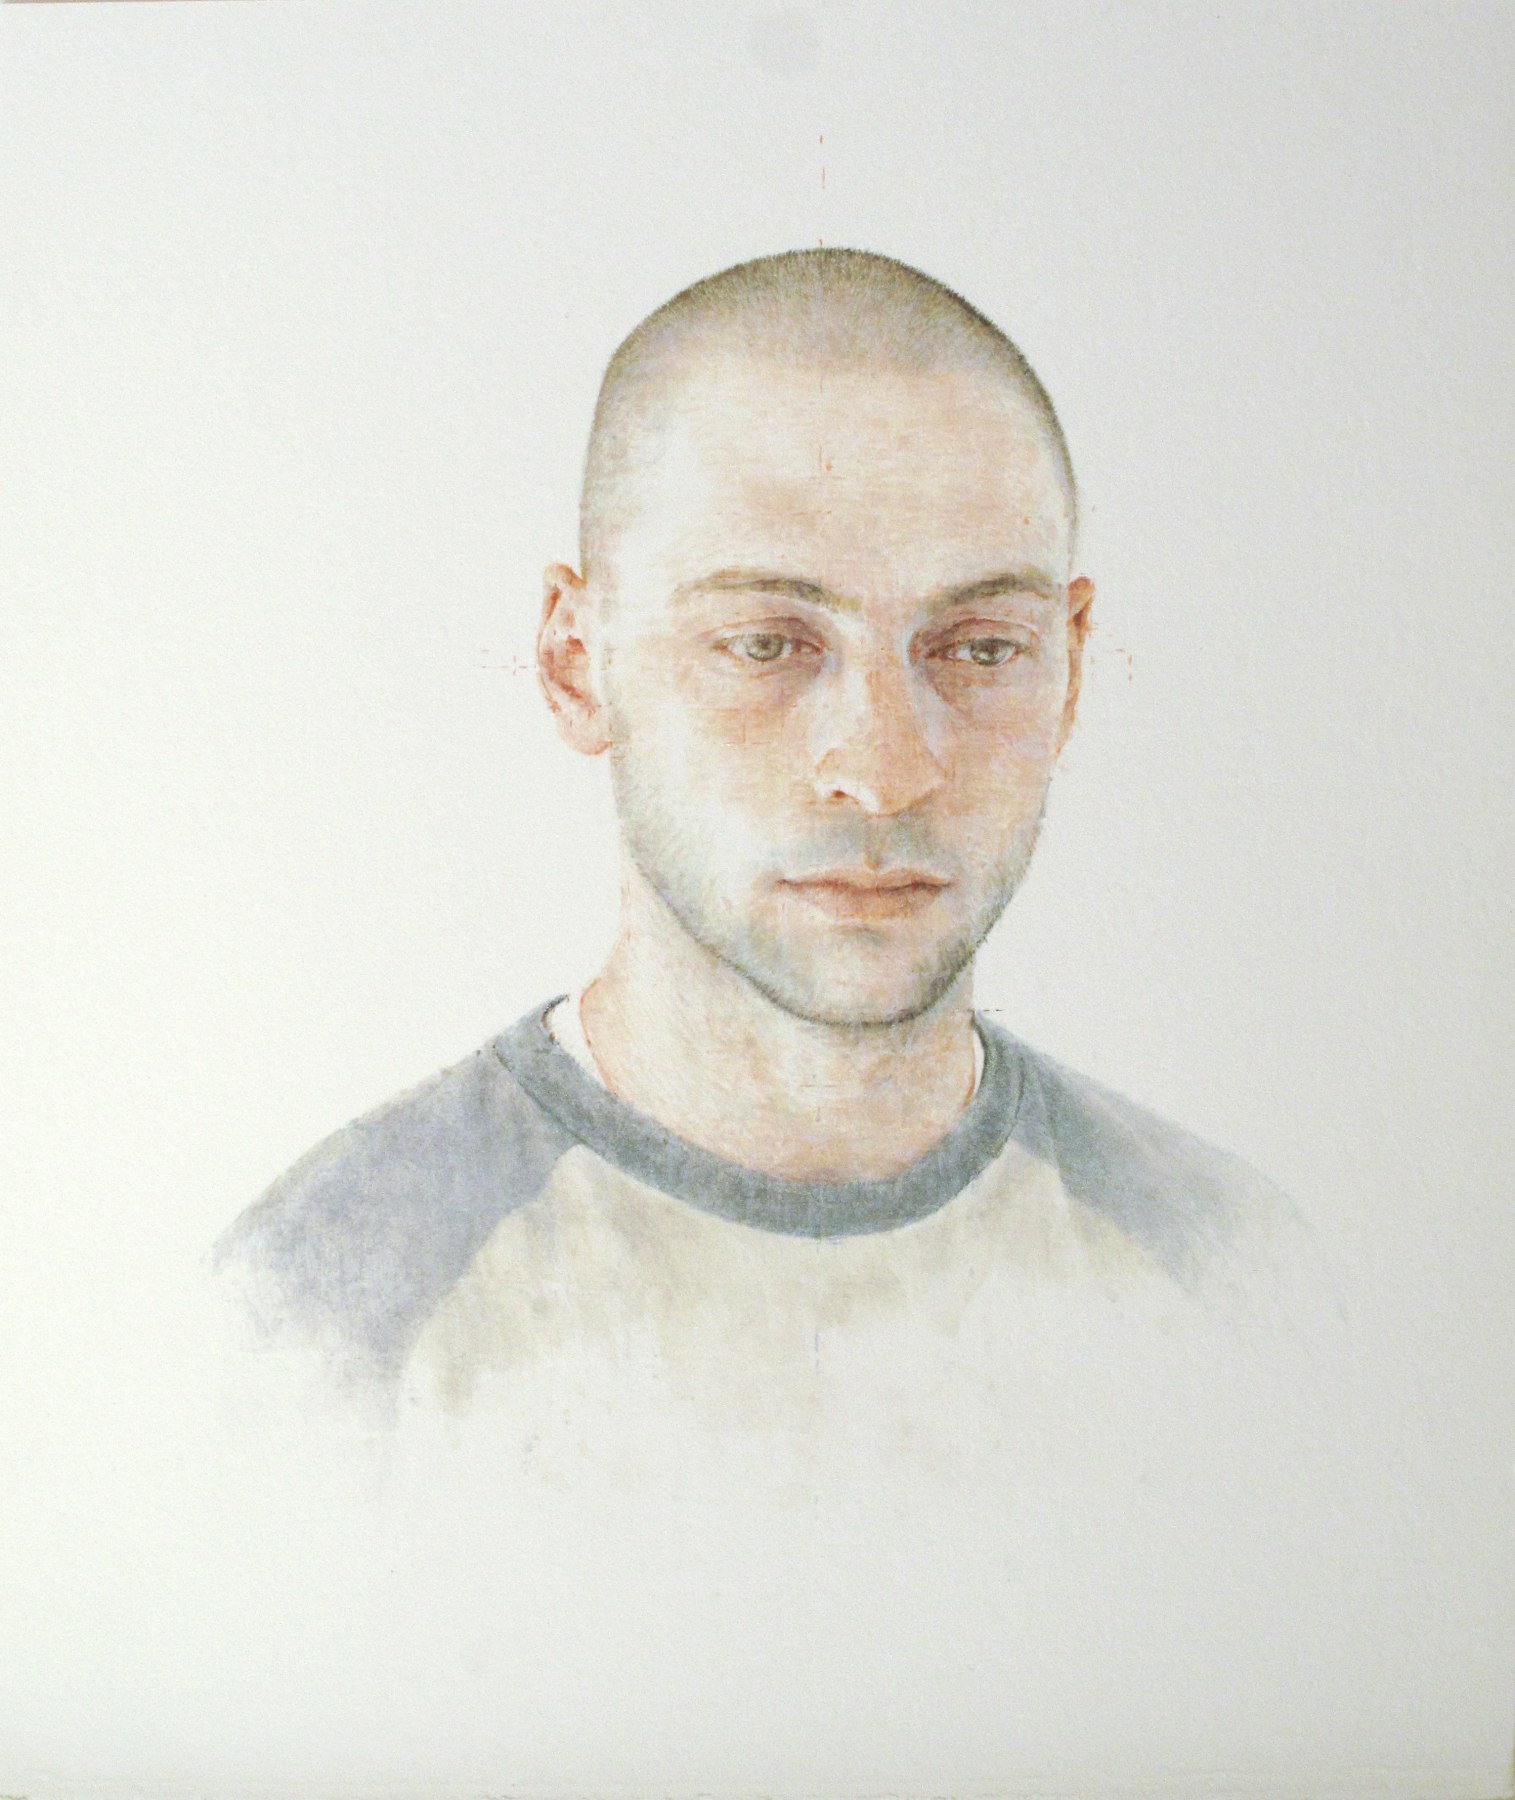 Robert Bauer, Adam (SOLD), 2011, tempera on paper, 12 x 10 inches